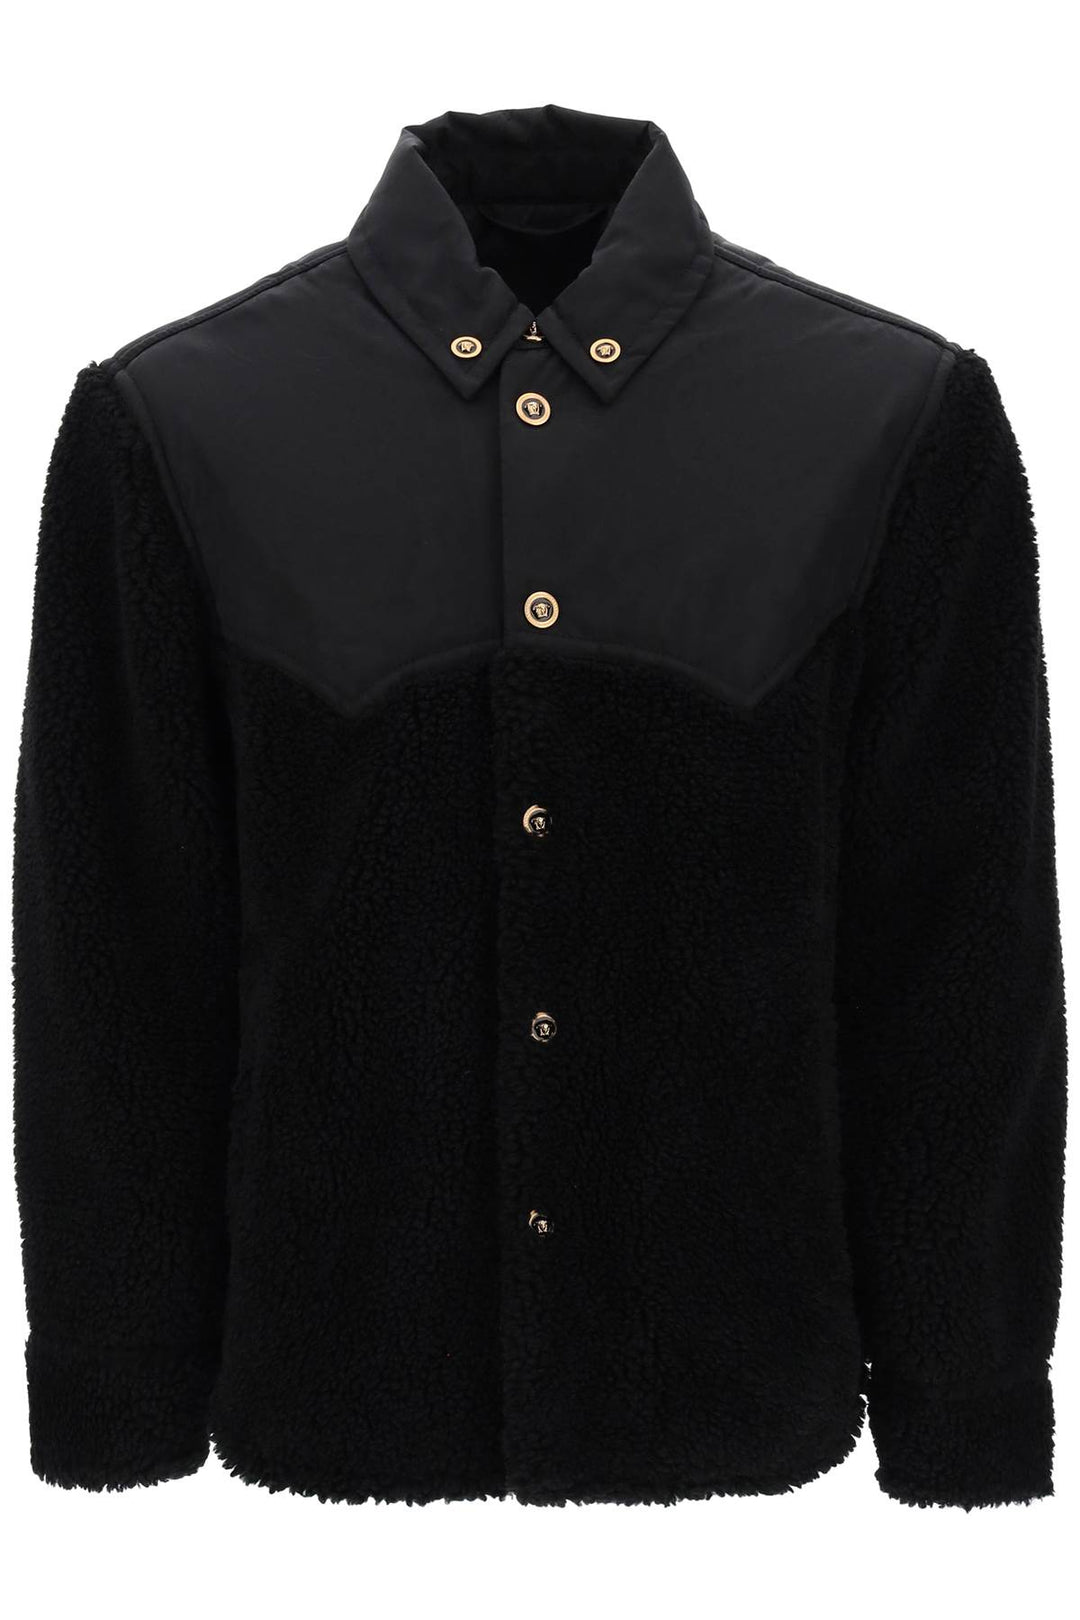 Versace Barocco Silhouette Fleece Jacket   Nero